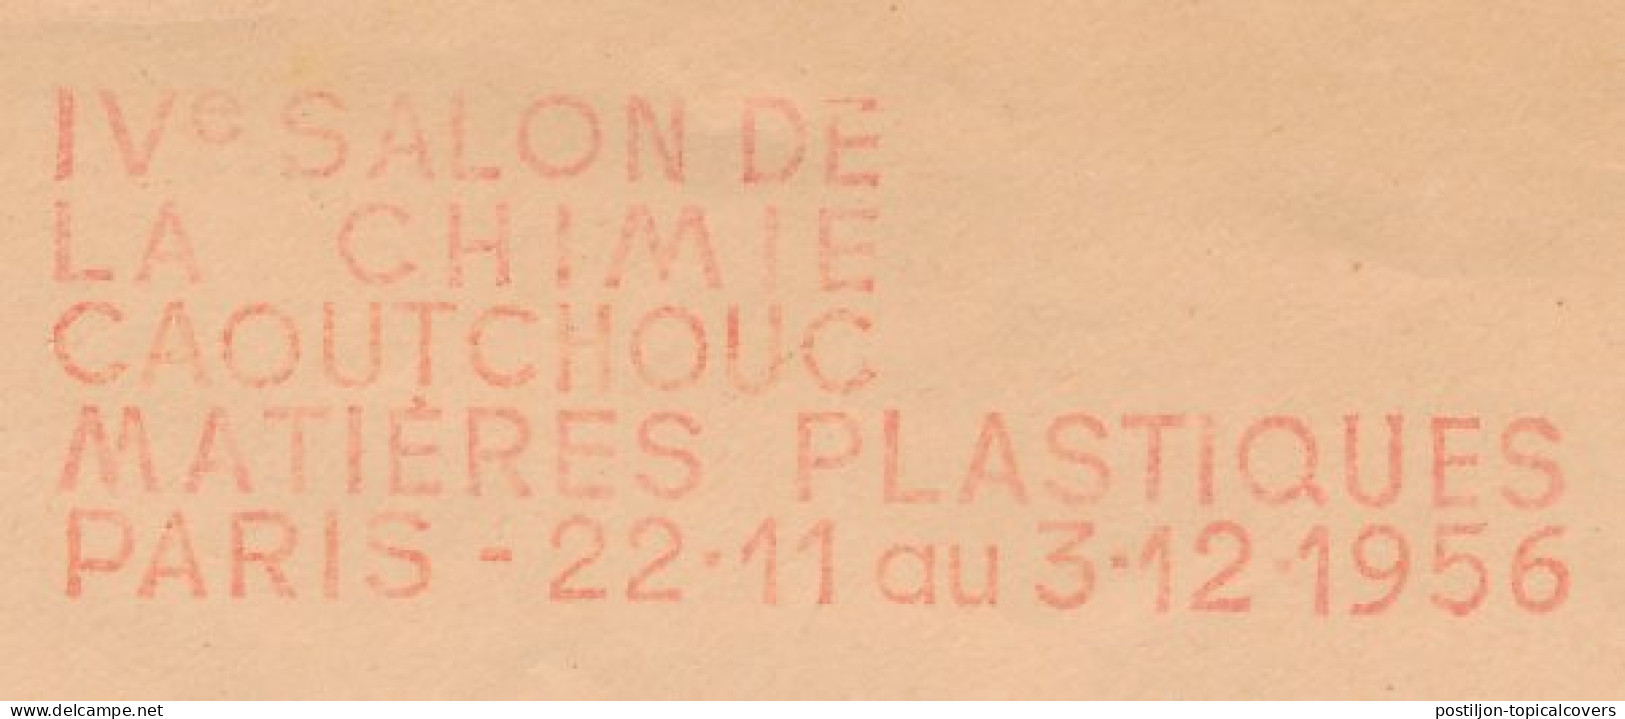 Meter Cover France 1956 Chemistry Exhibition - Rubber - Plastics - Química